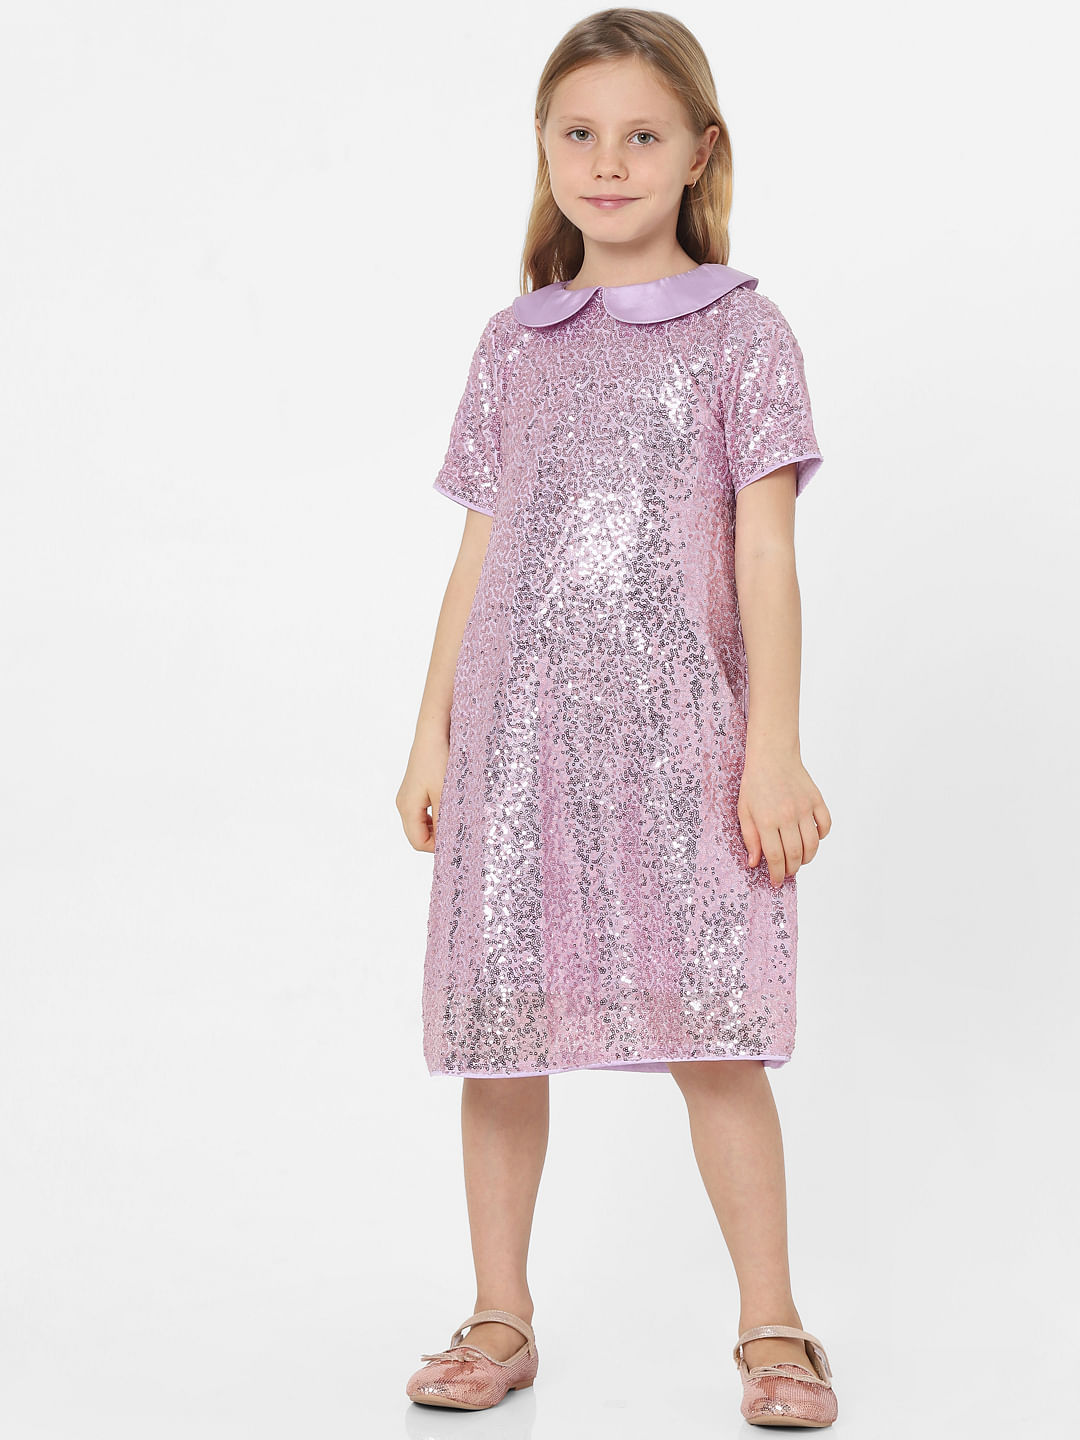 Ashley Lauren Kids 8174 Size 4, 10 Fuchsia Girls Sequin Jumpsuit Cape –  Glass Slipper Formals